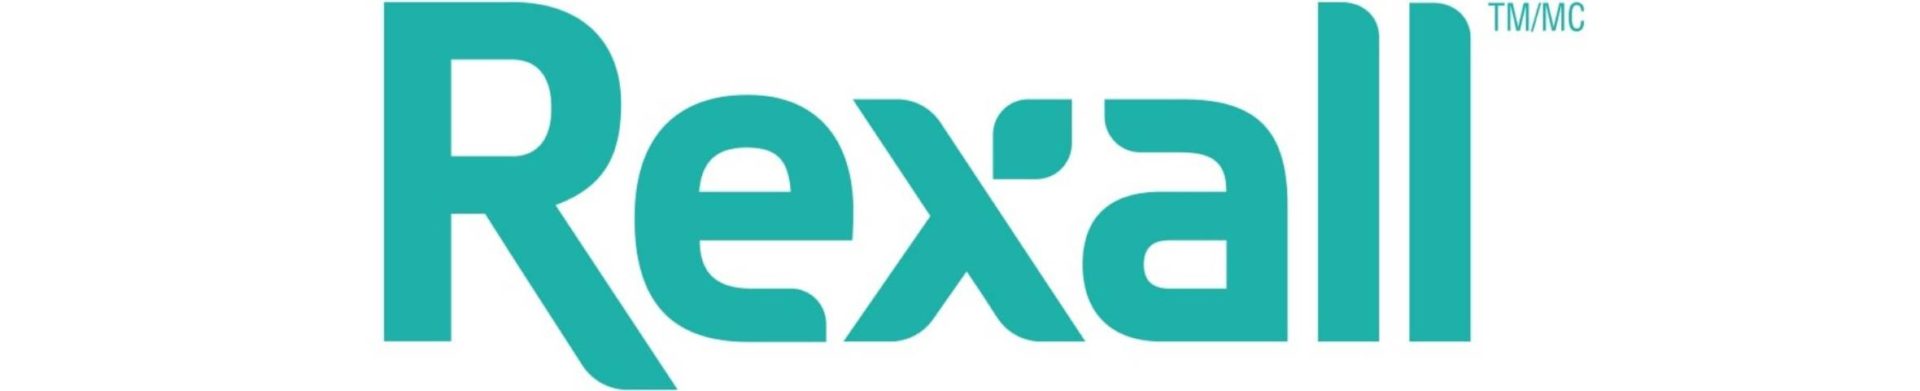 Rexall company logo